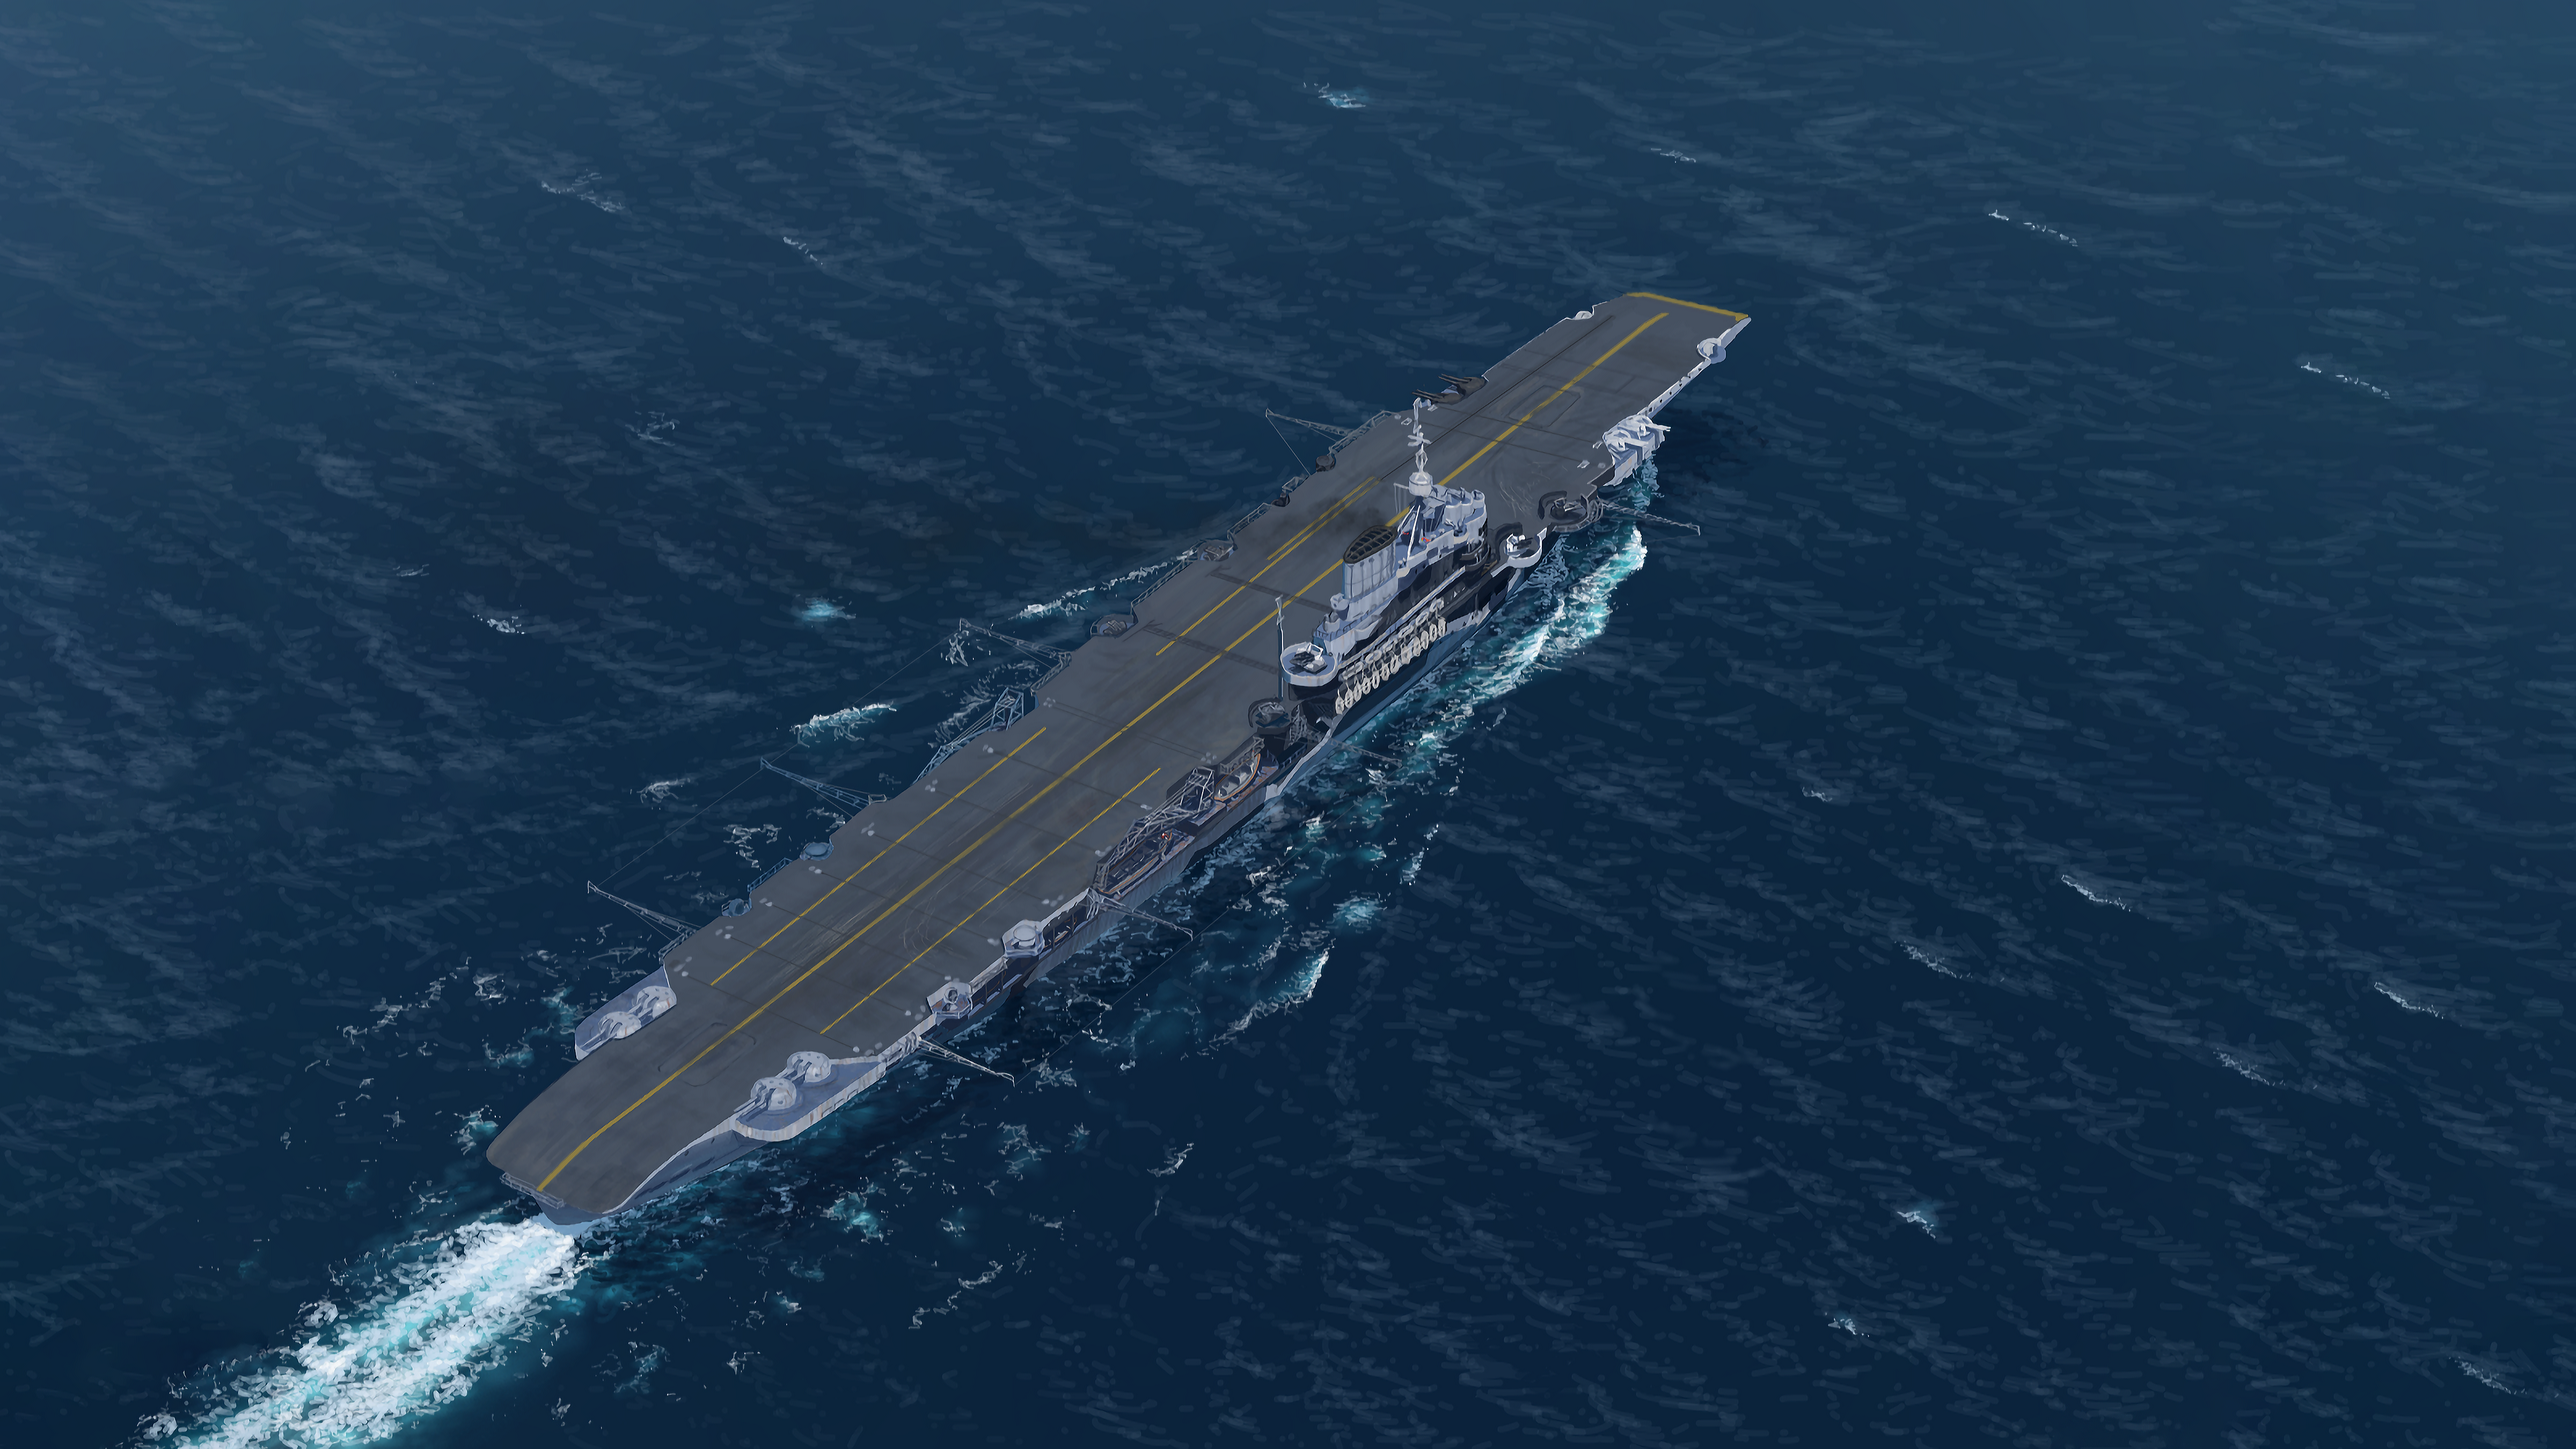 Illustrious (Royal Navy Aircraft Carrier) [4800x2700]